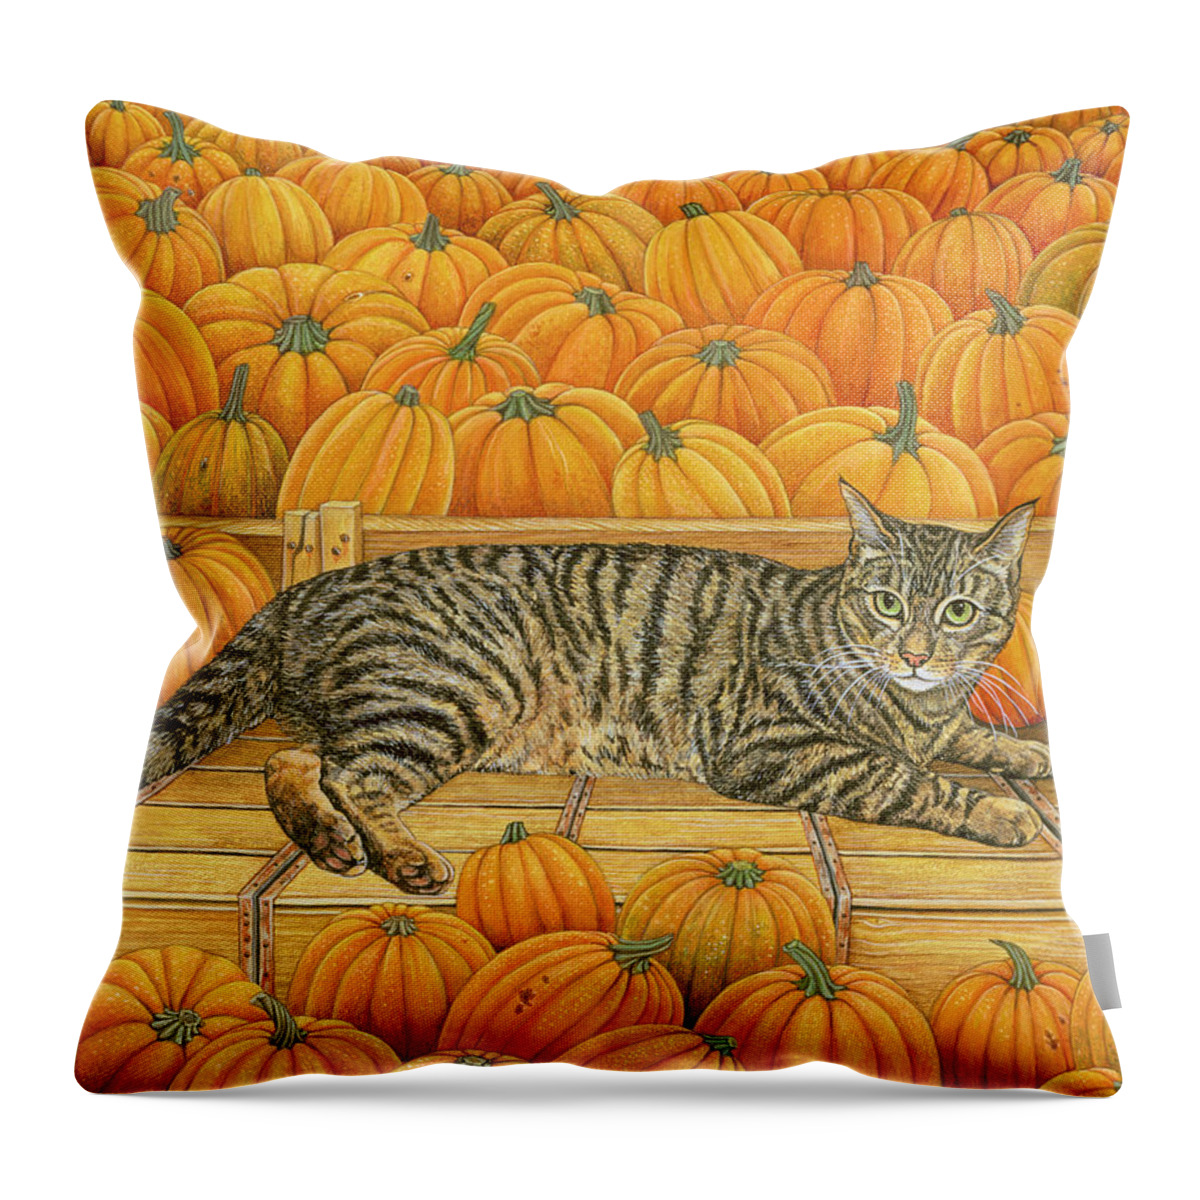 Pumpkin Throw Pillow featuring the painting The Pumpkin Cat by Ditz